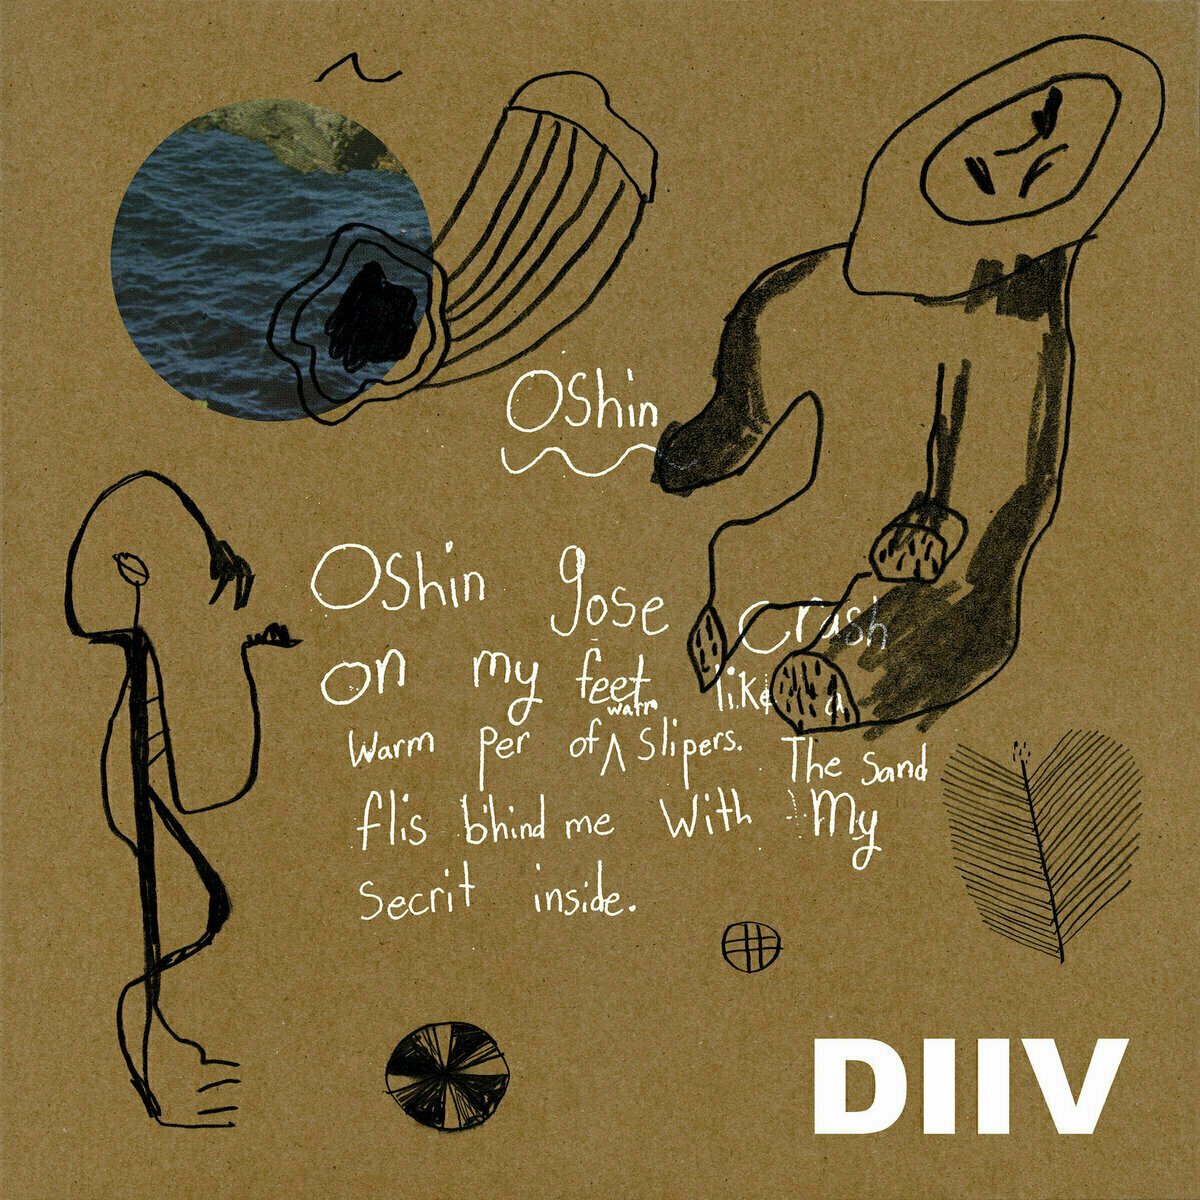 LP deska Diiv - Oshin - 10th Anniversary (Reissue) (Blue Vinyl) (2 LP)